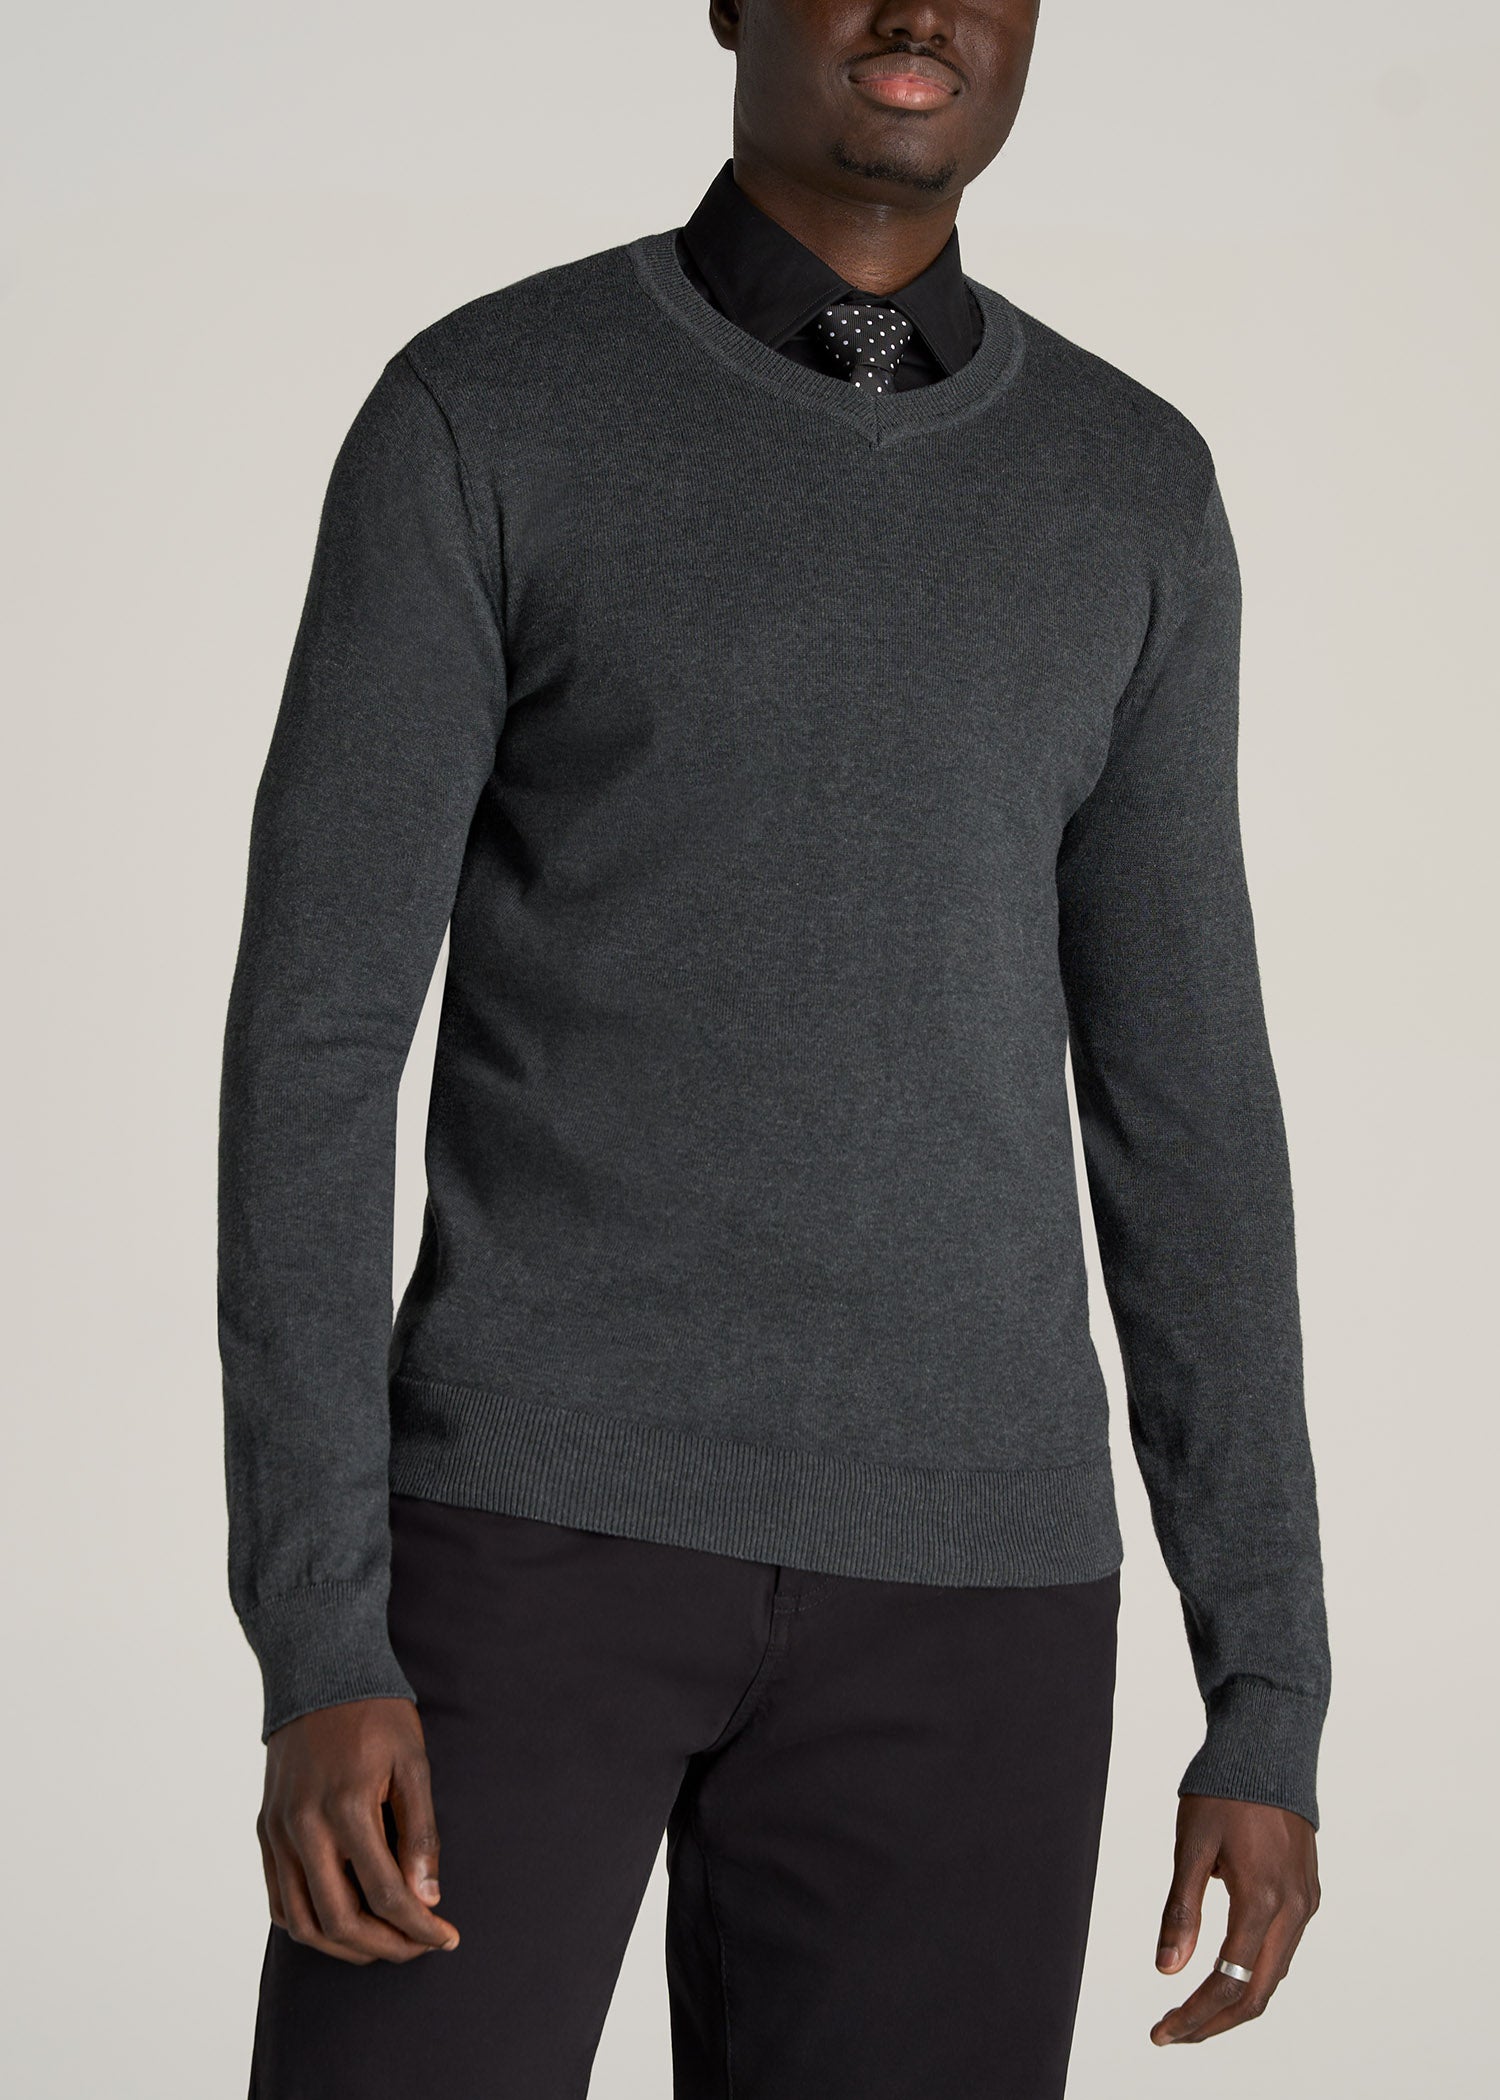 Grey V Neck Sweater Men's: Tall V-Neck Sweater